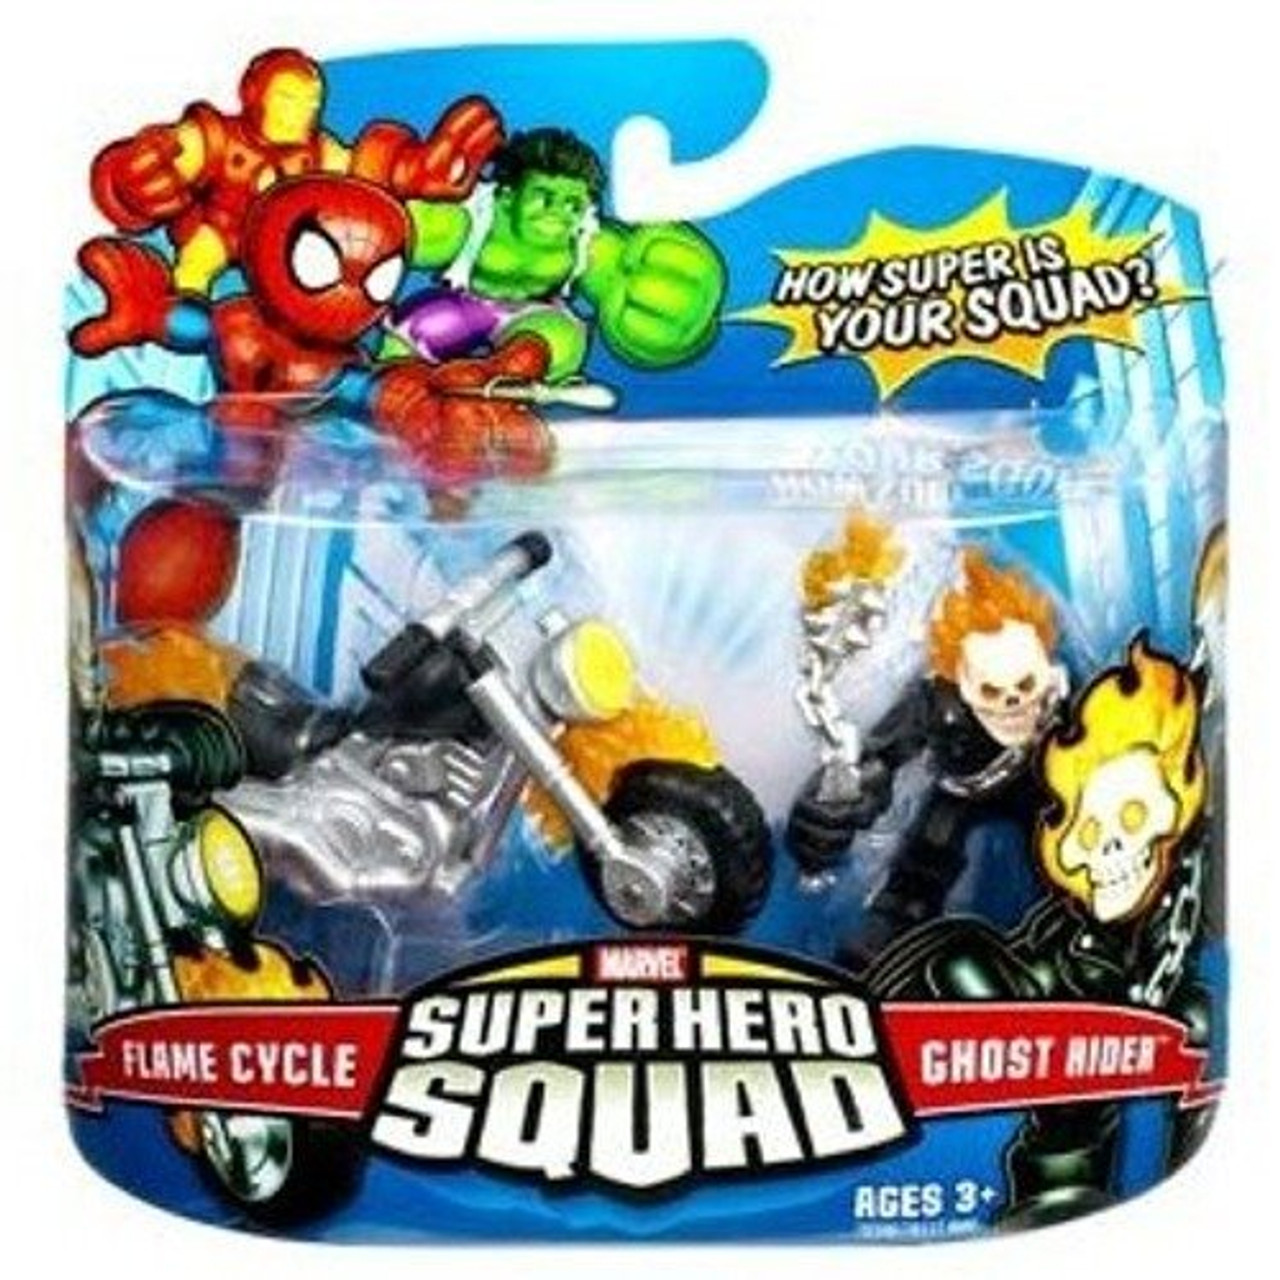 marvel super heroes squad